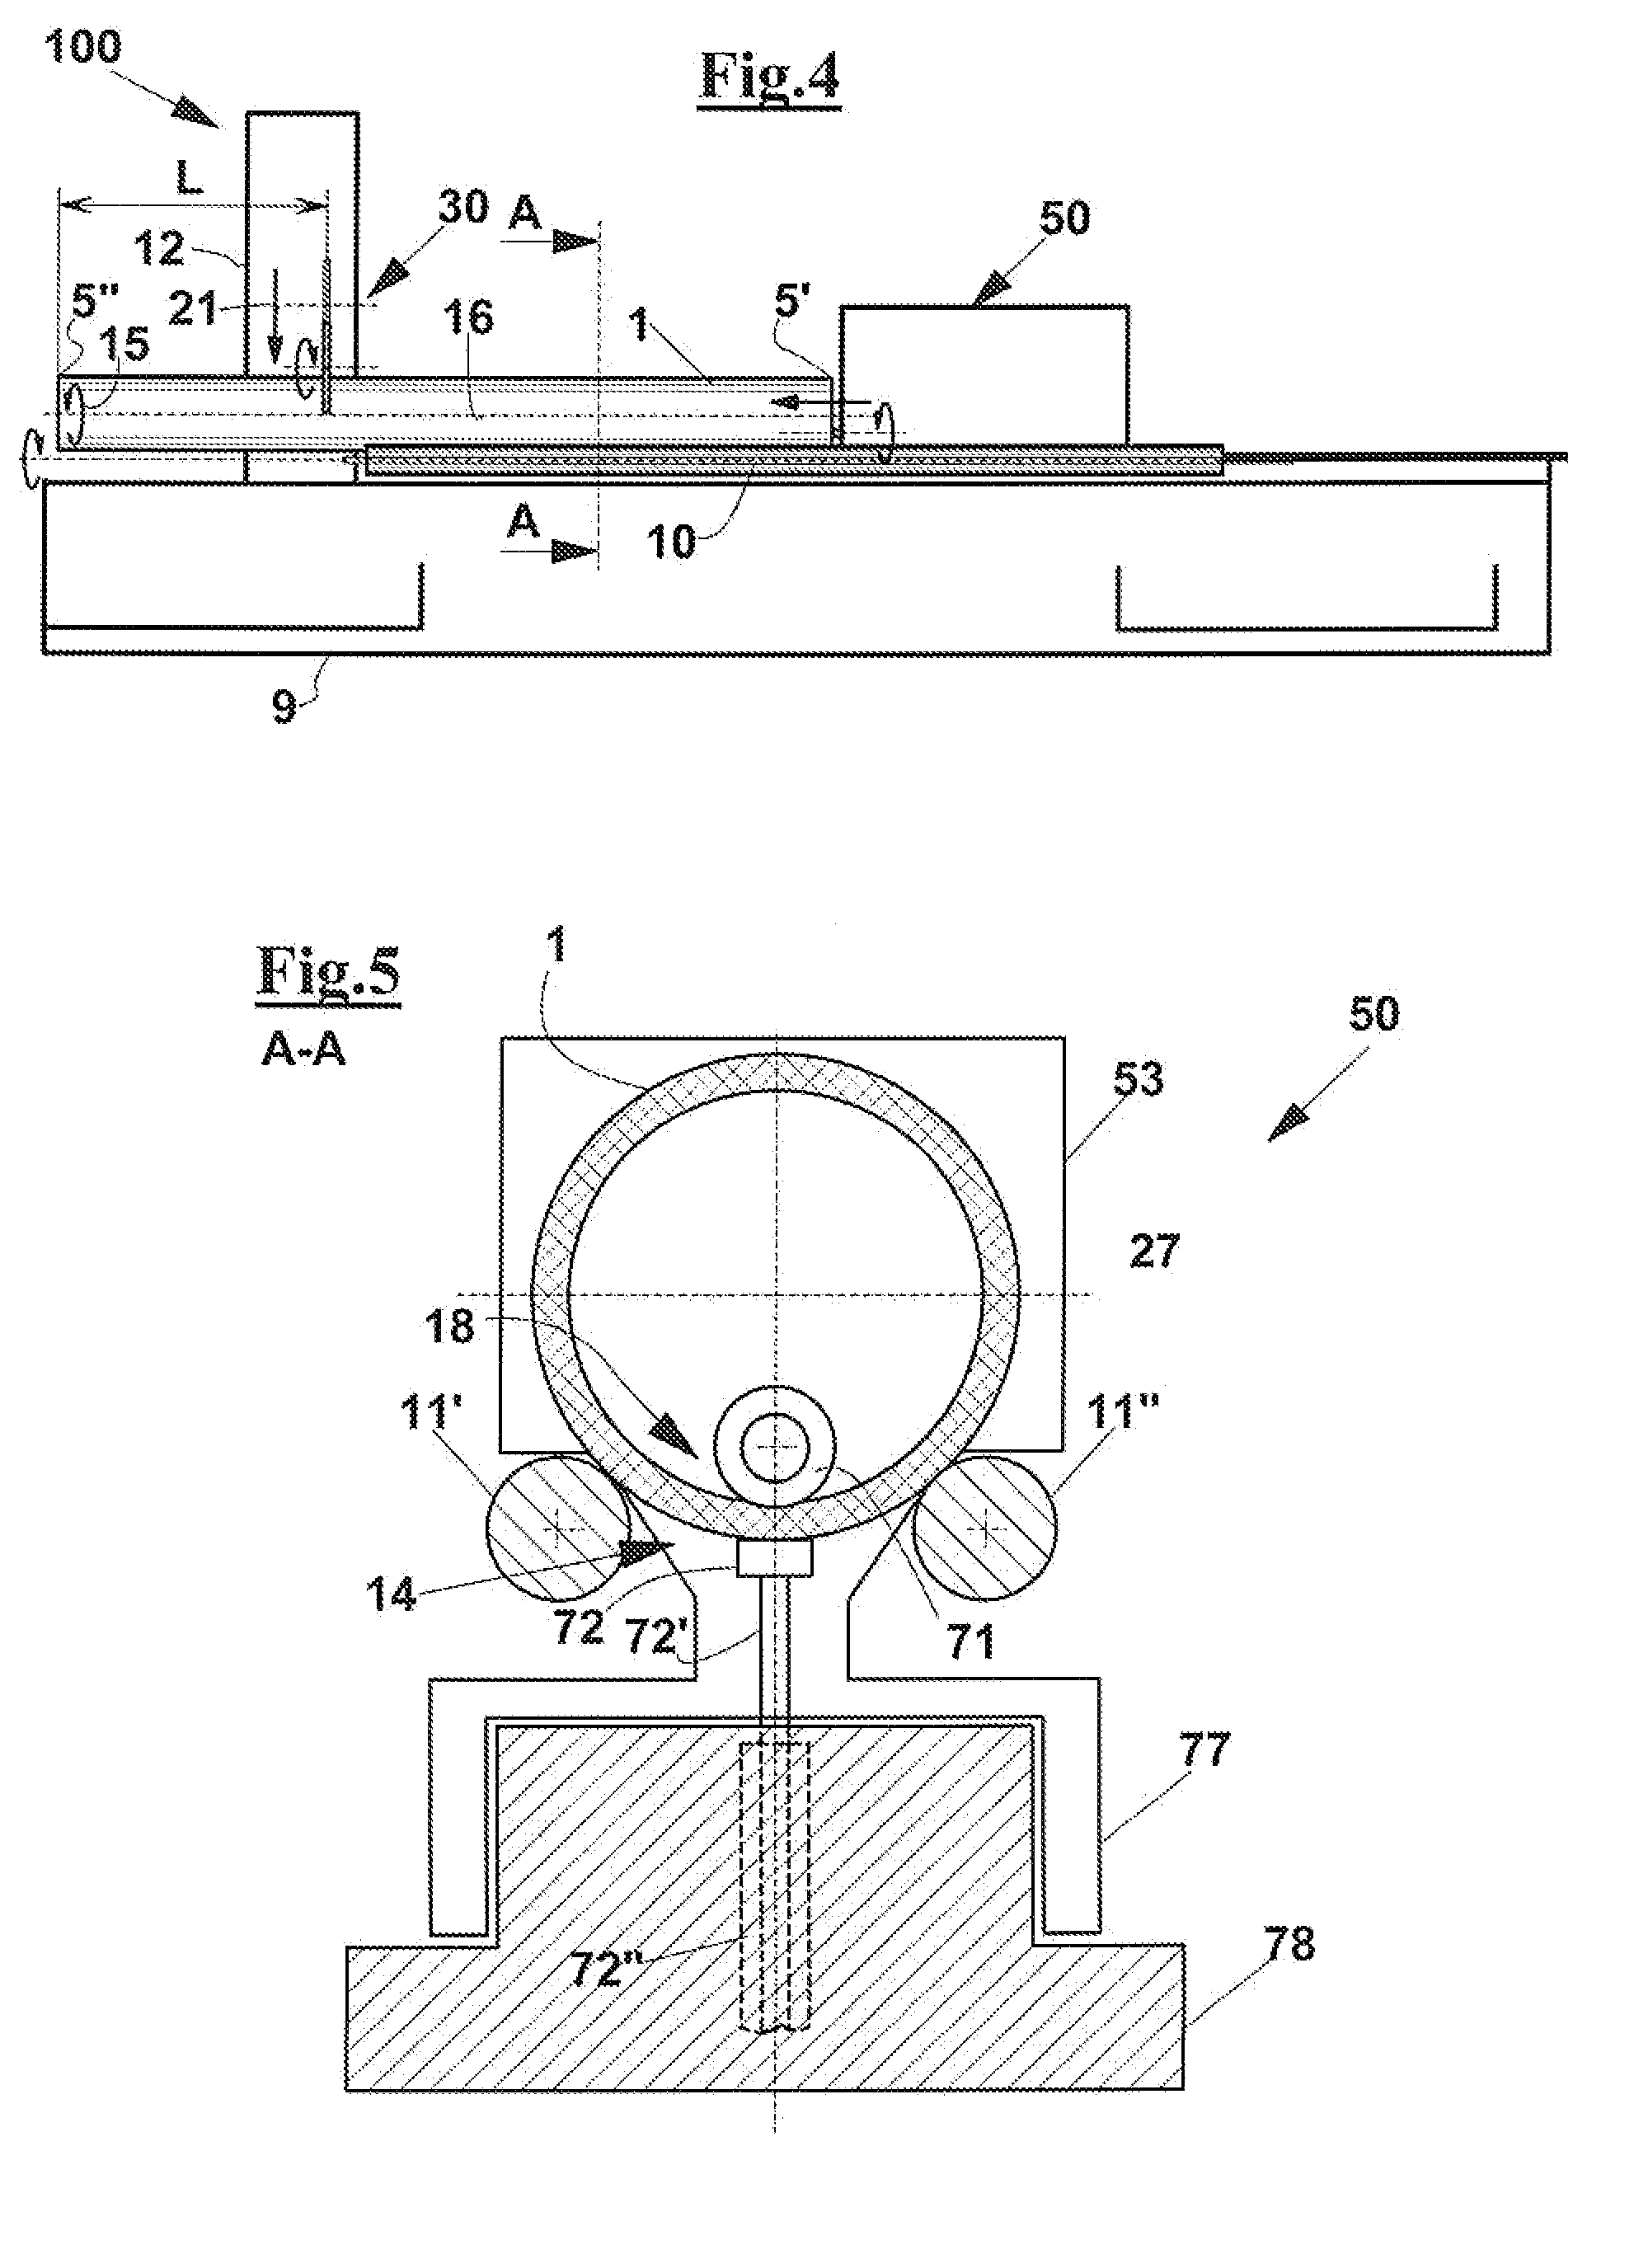 Apparatus for transversally sawing a tubular body